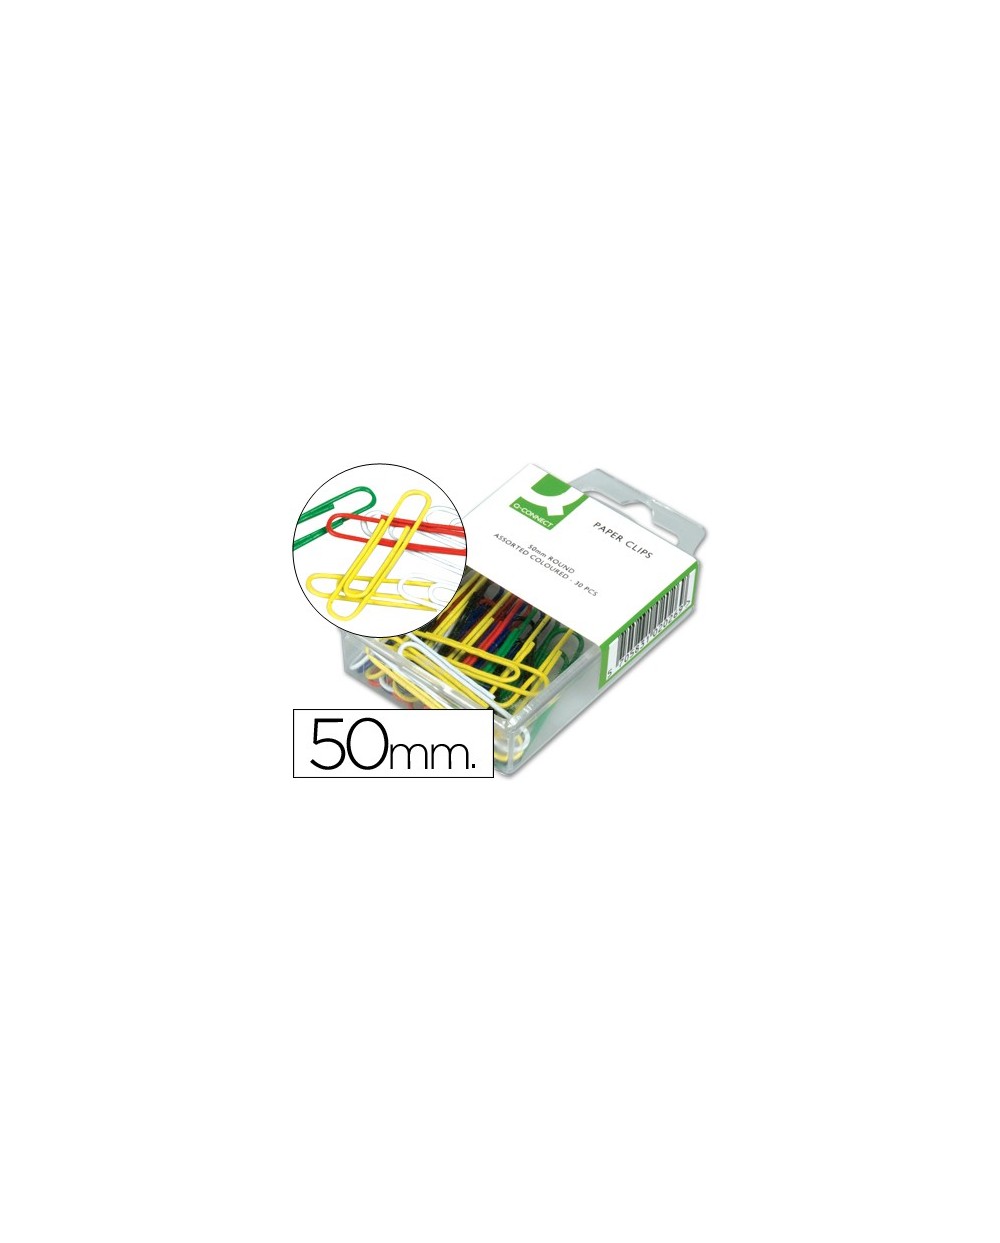 Clips colores q connect 50 mm caja de 30 unidades colores surtidos